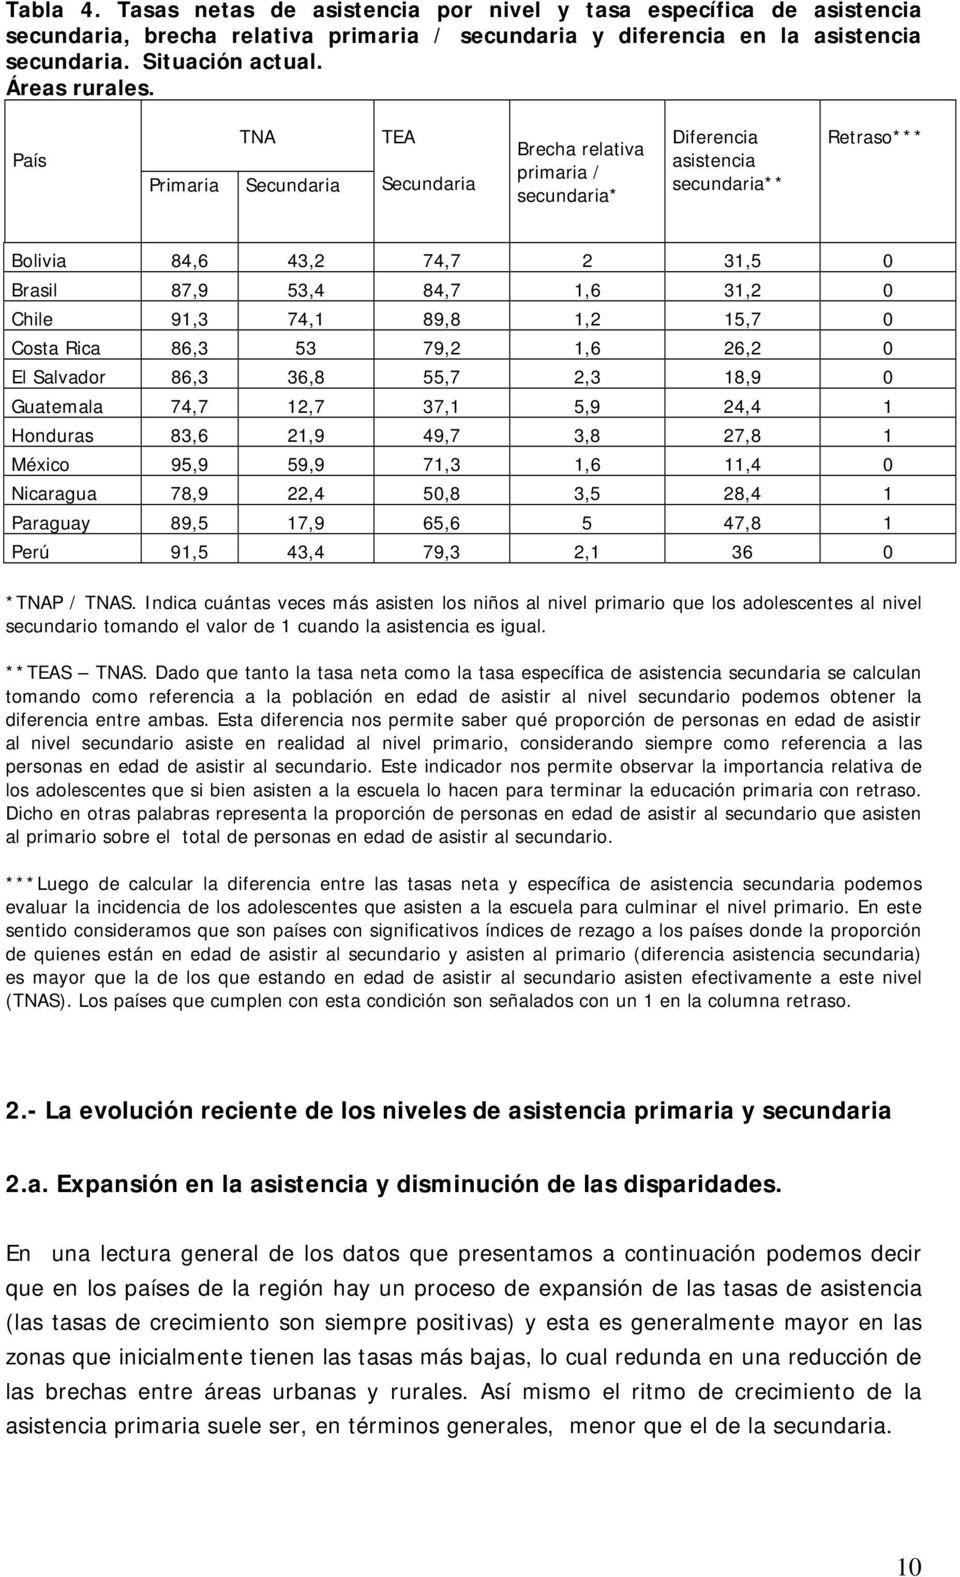 País Primaria TNA Secundaria TEA Secundaria Brecha relativa primaria / secundaria* Diferencia asistencia secundaria** Retraso*** Bolivia 84,6 43,2 74,7 2 31,5 0 Brasil 87,9 53,4 84,7 1,6 31,2 0 Chile